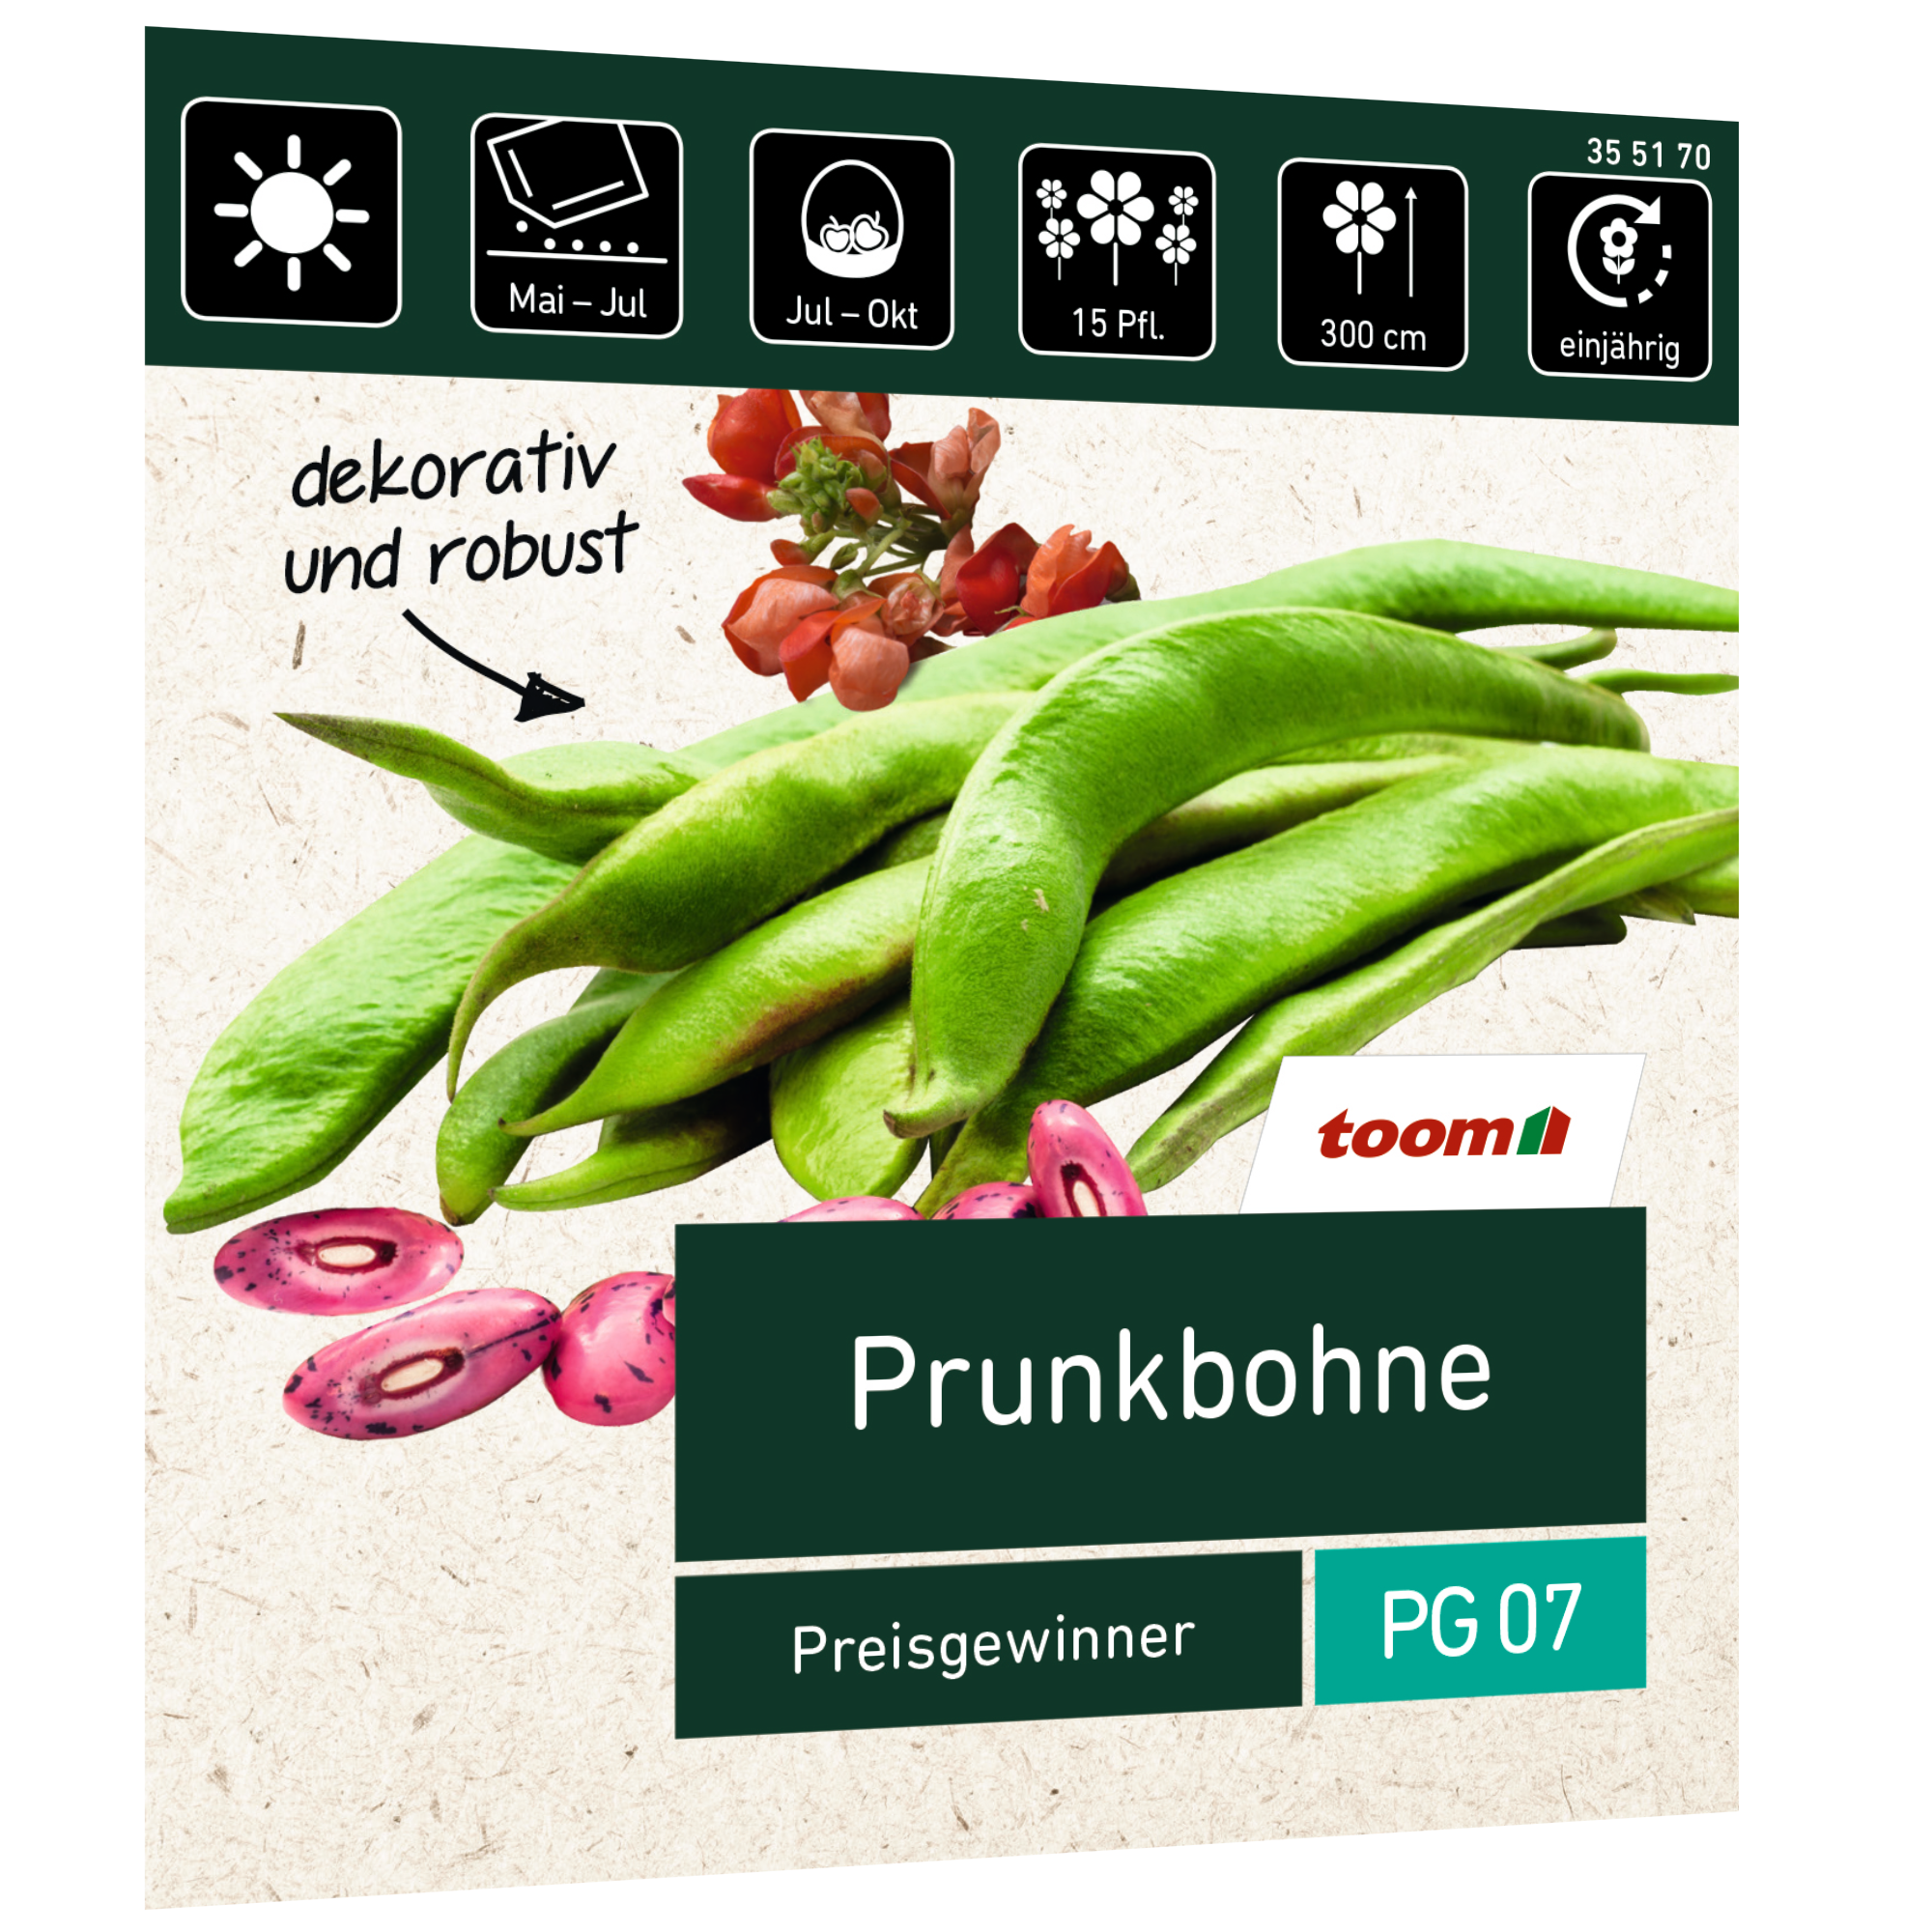 Prunkbohne 'Preisgewinner' + product picture